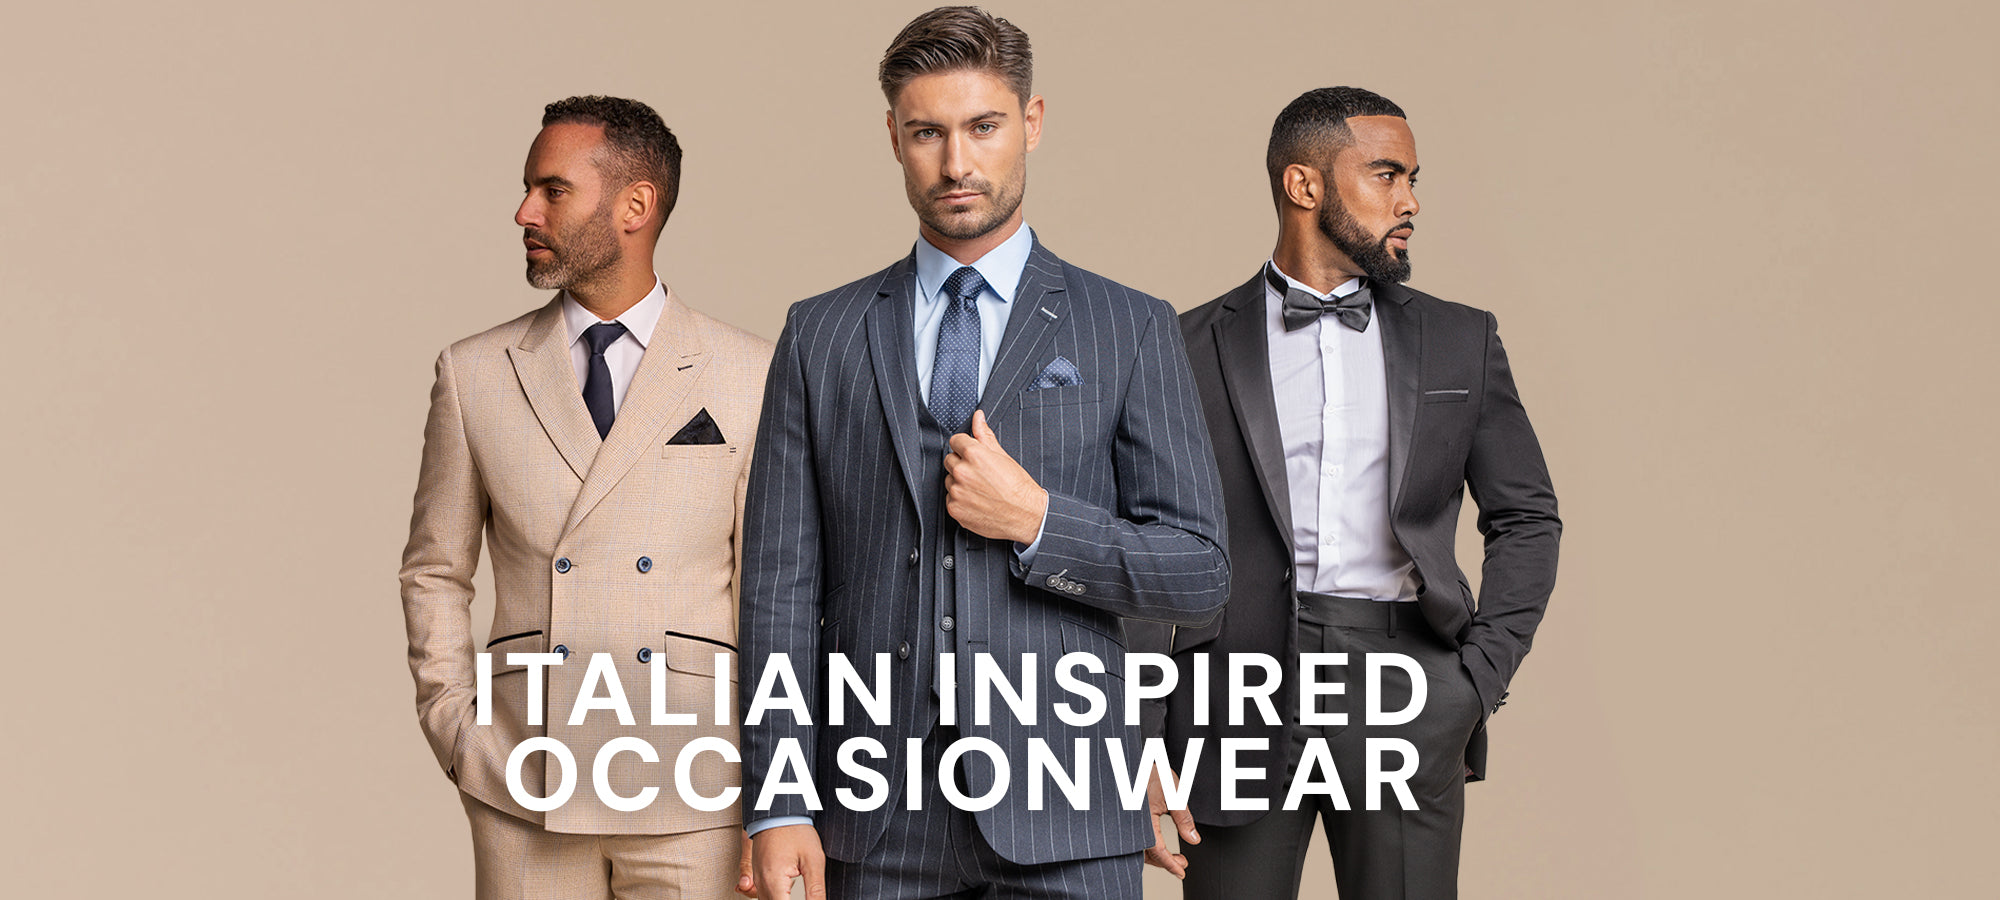 Italian Inspired Occasionwear